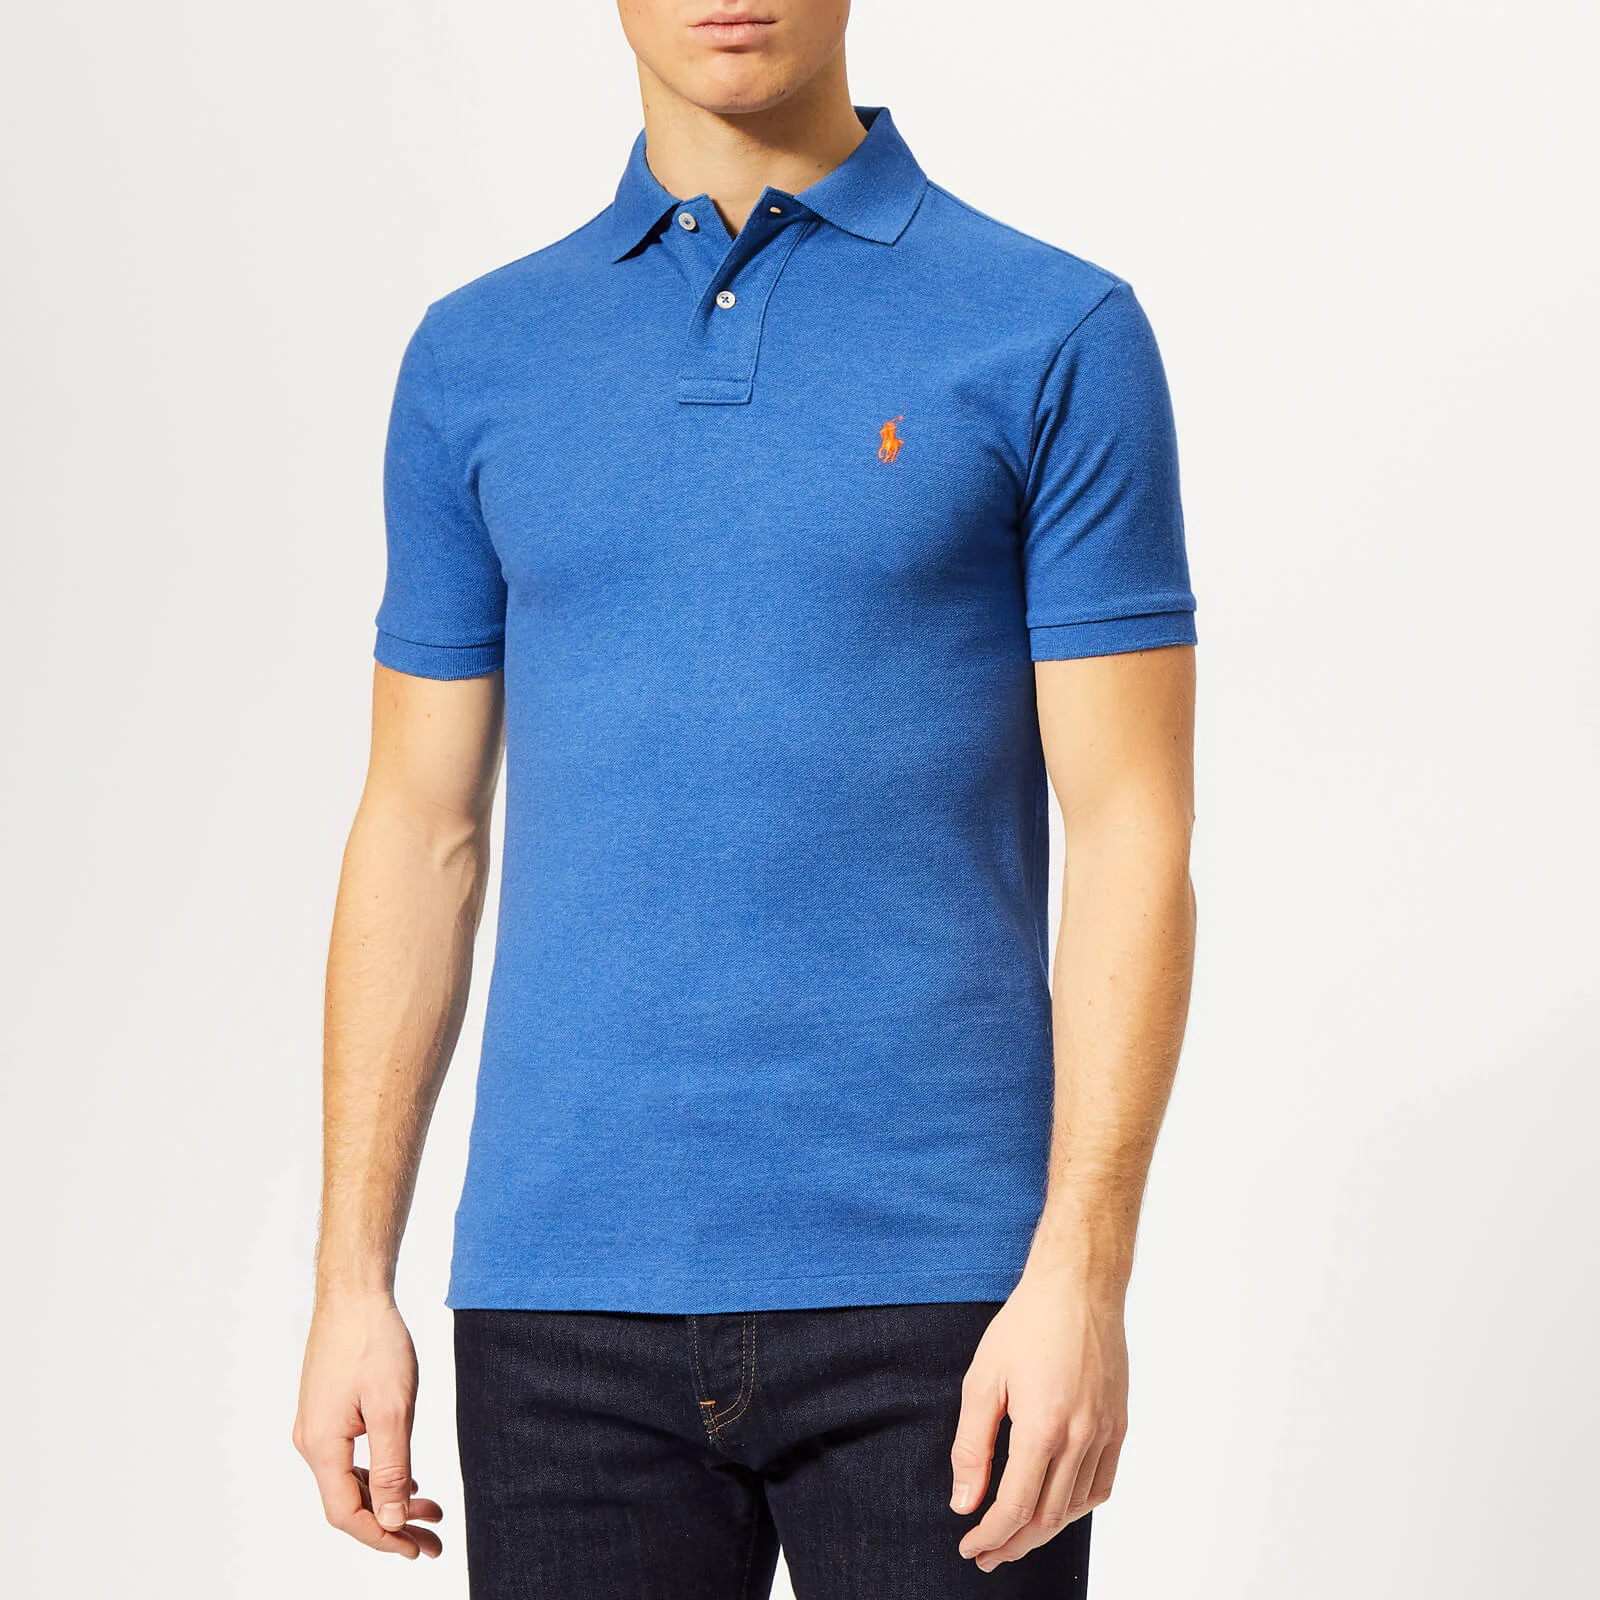 Polo Ralph Lauren Men's Slim Fit Mesh Polo Shirt - Dockside Blue Heather Image 1